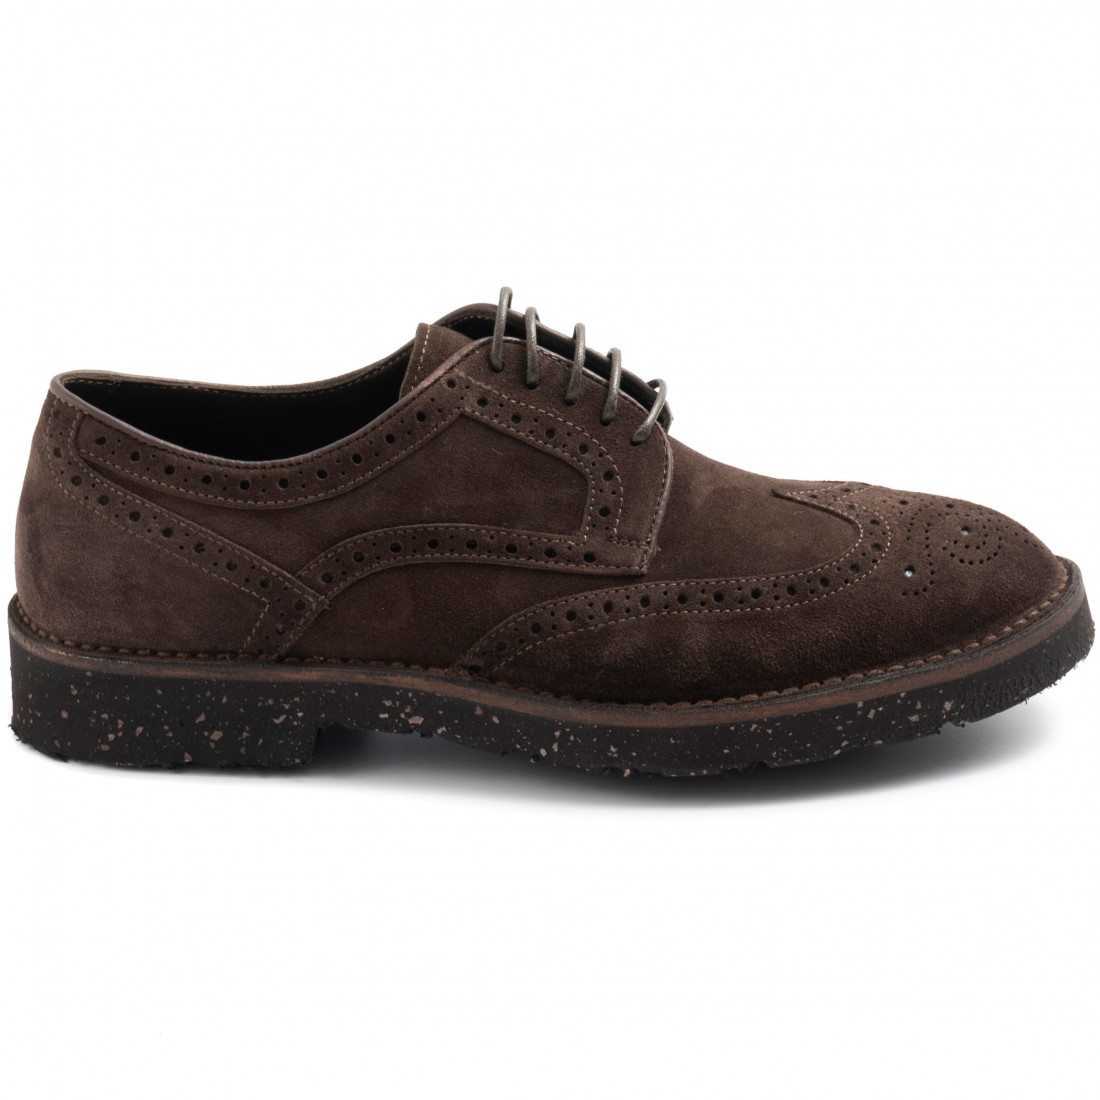 Men's Calpierre derby shoes in dark brown suede